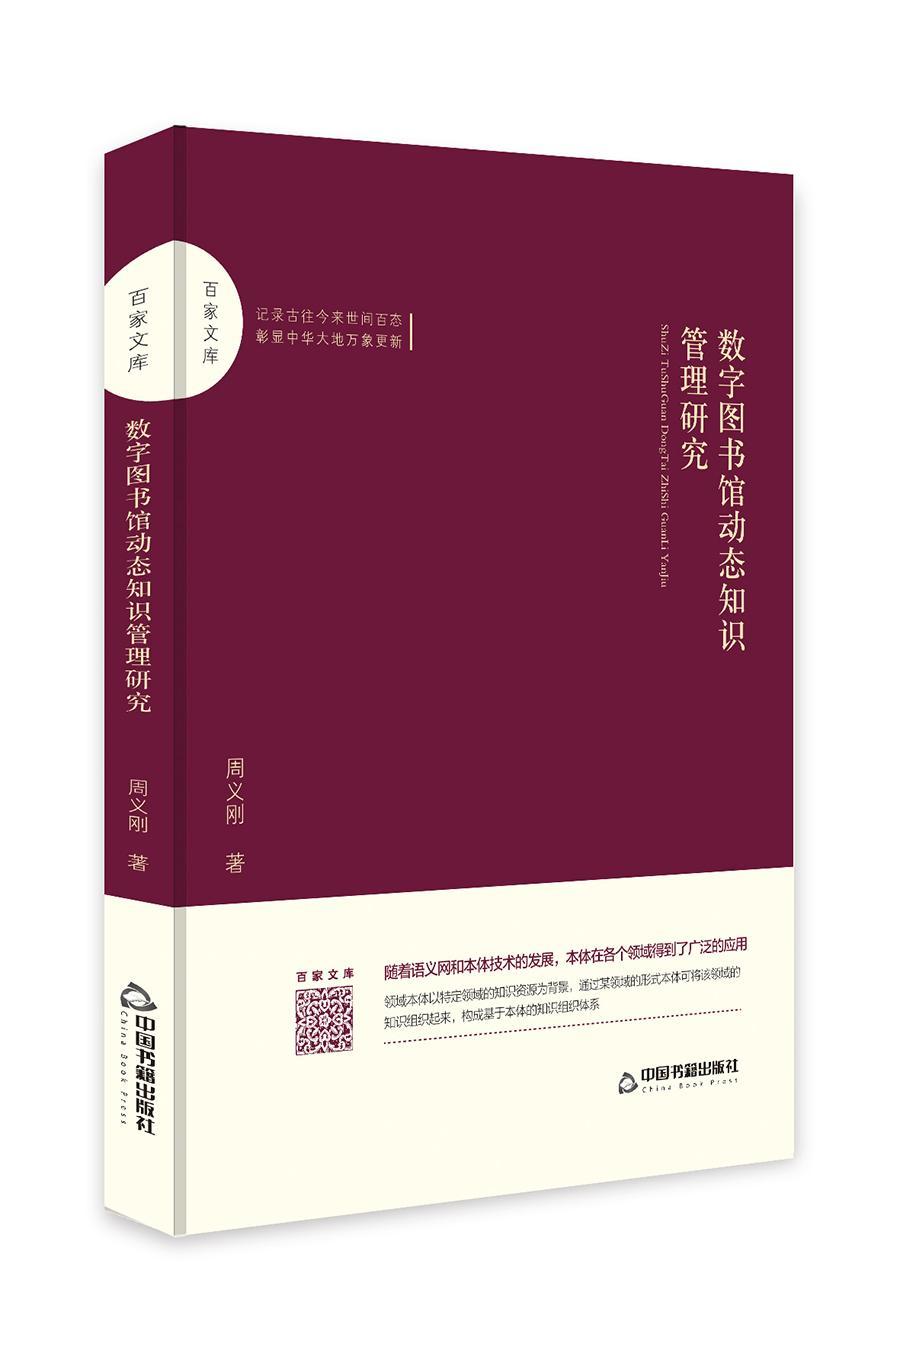 RT 正版 数字图书馆动态知识管理研究9787506870672 周义刚中国书籍出版社